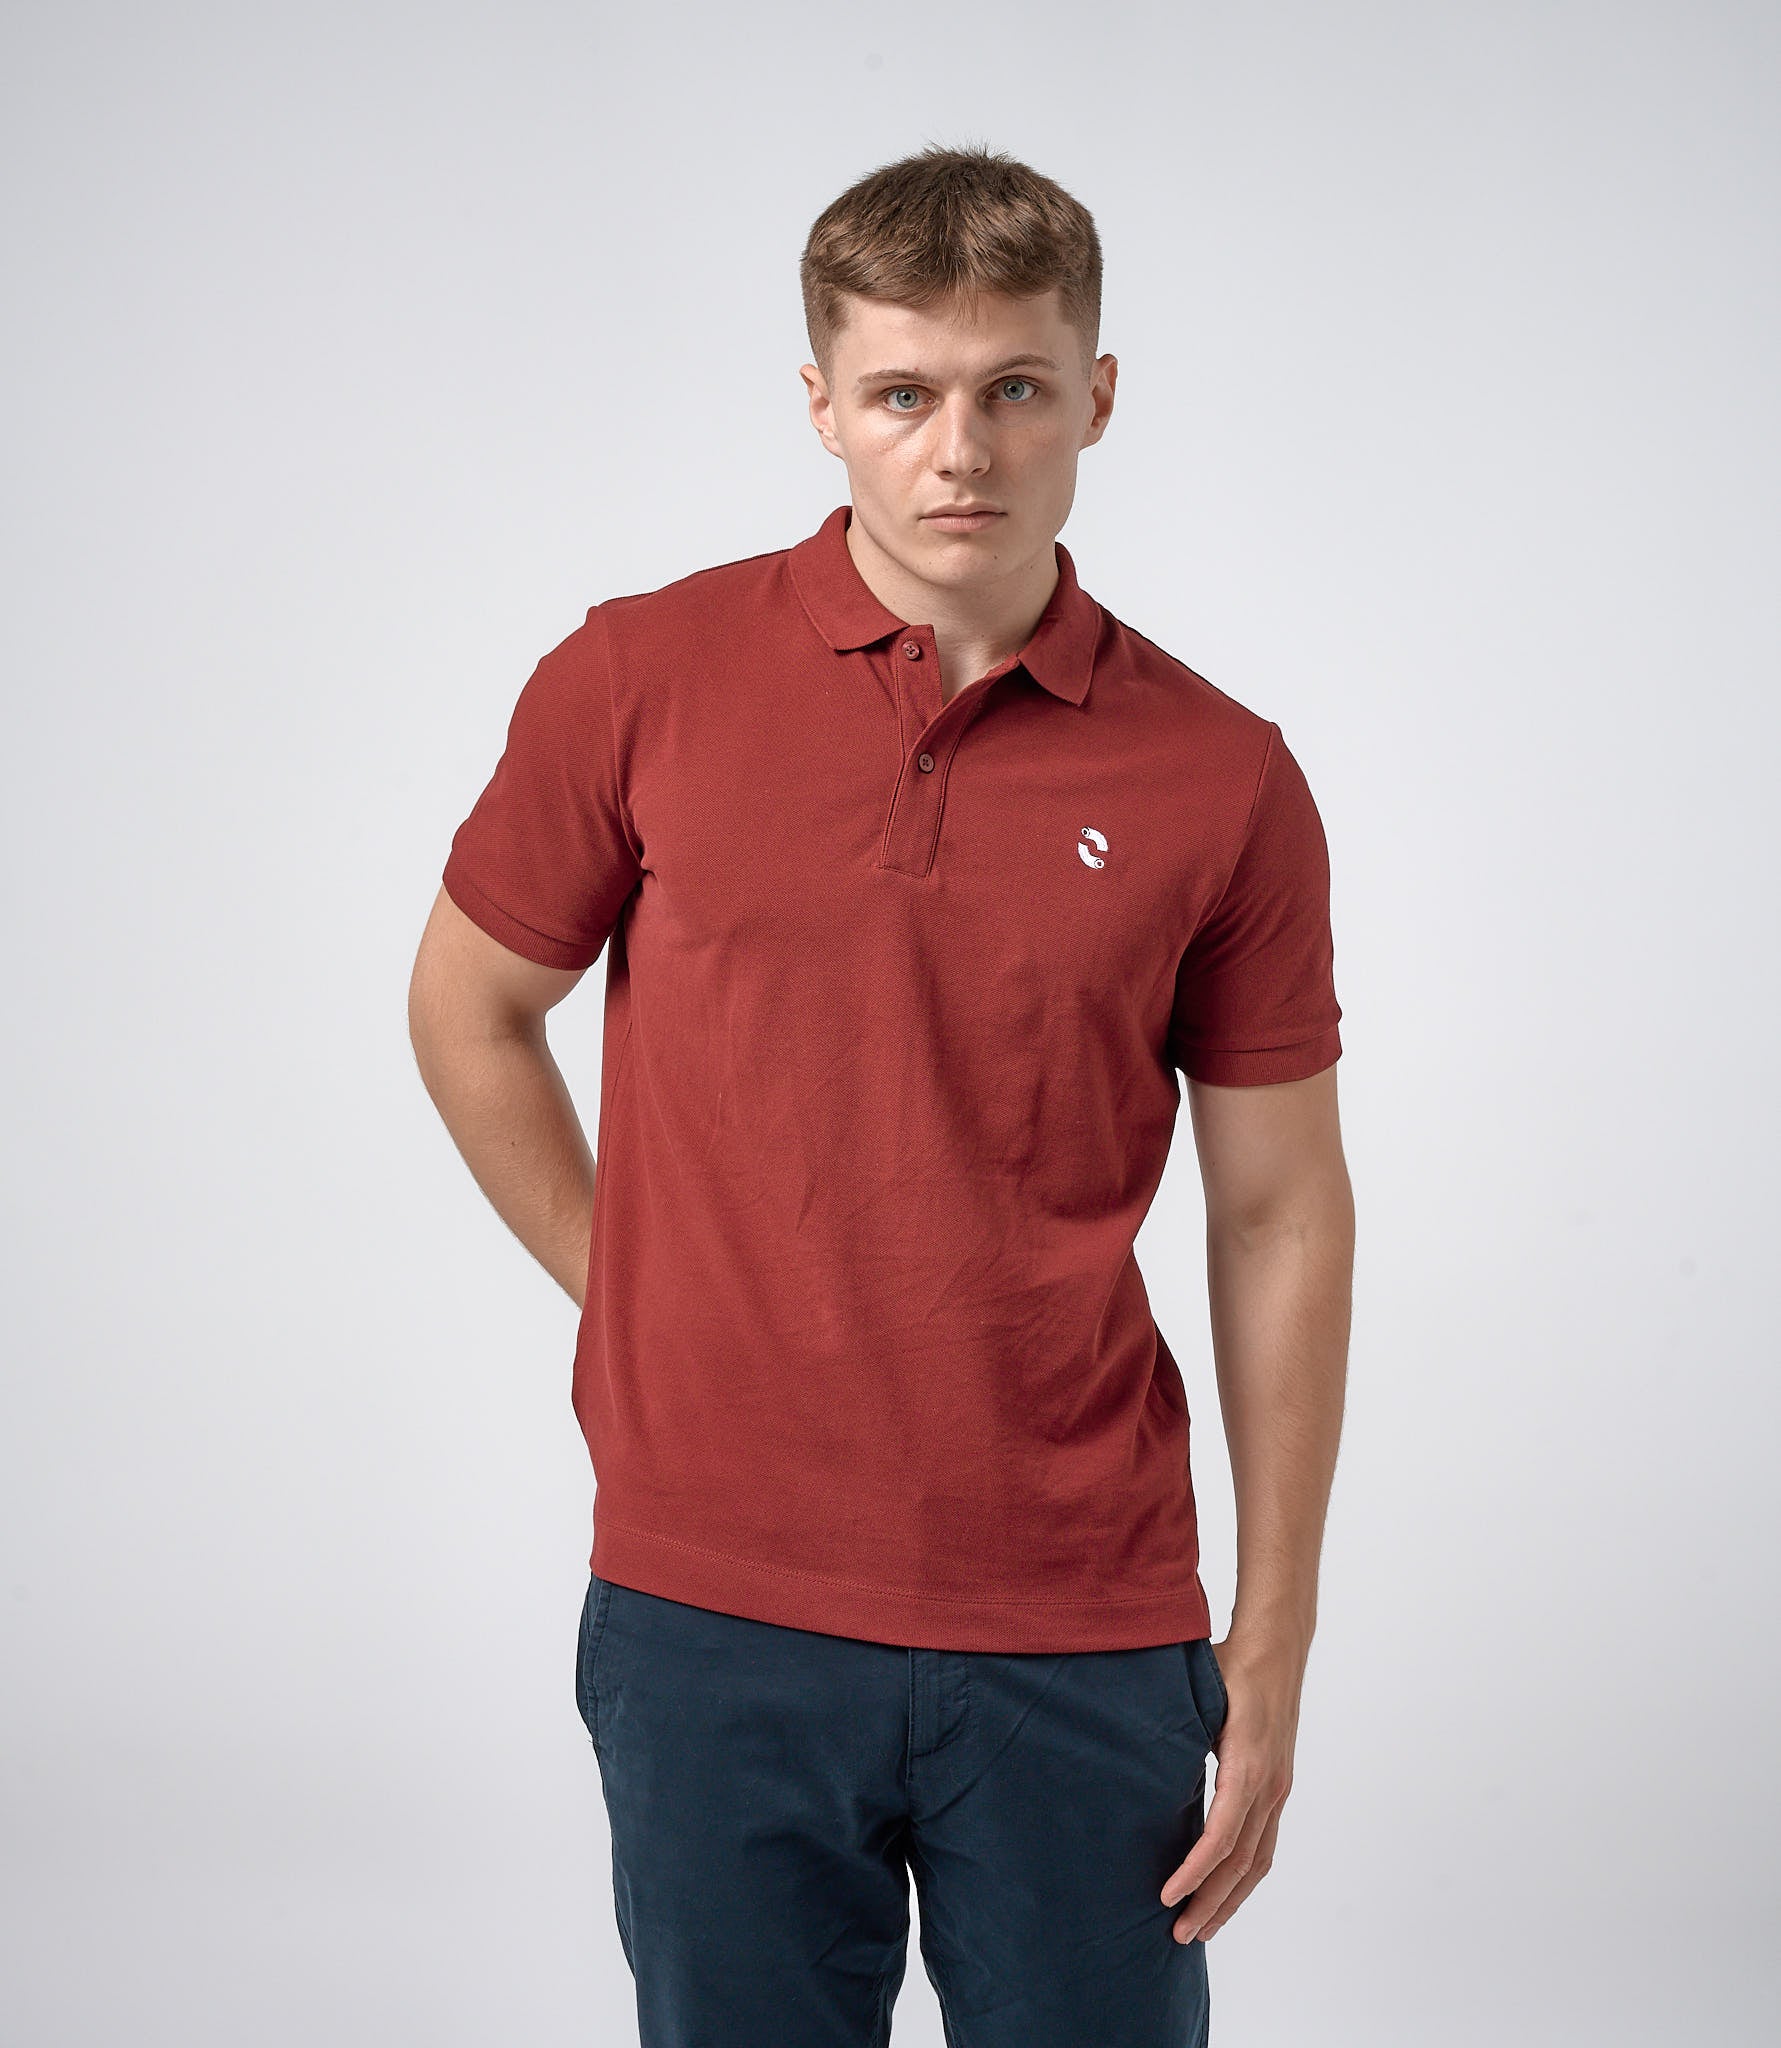 Omnitau Men's Prime Organic Cotton Short Sleeve Polo Shirt - Burgundy